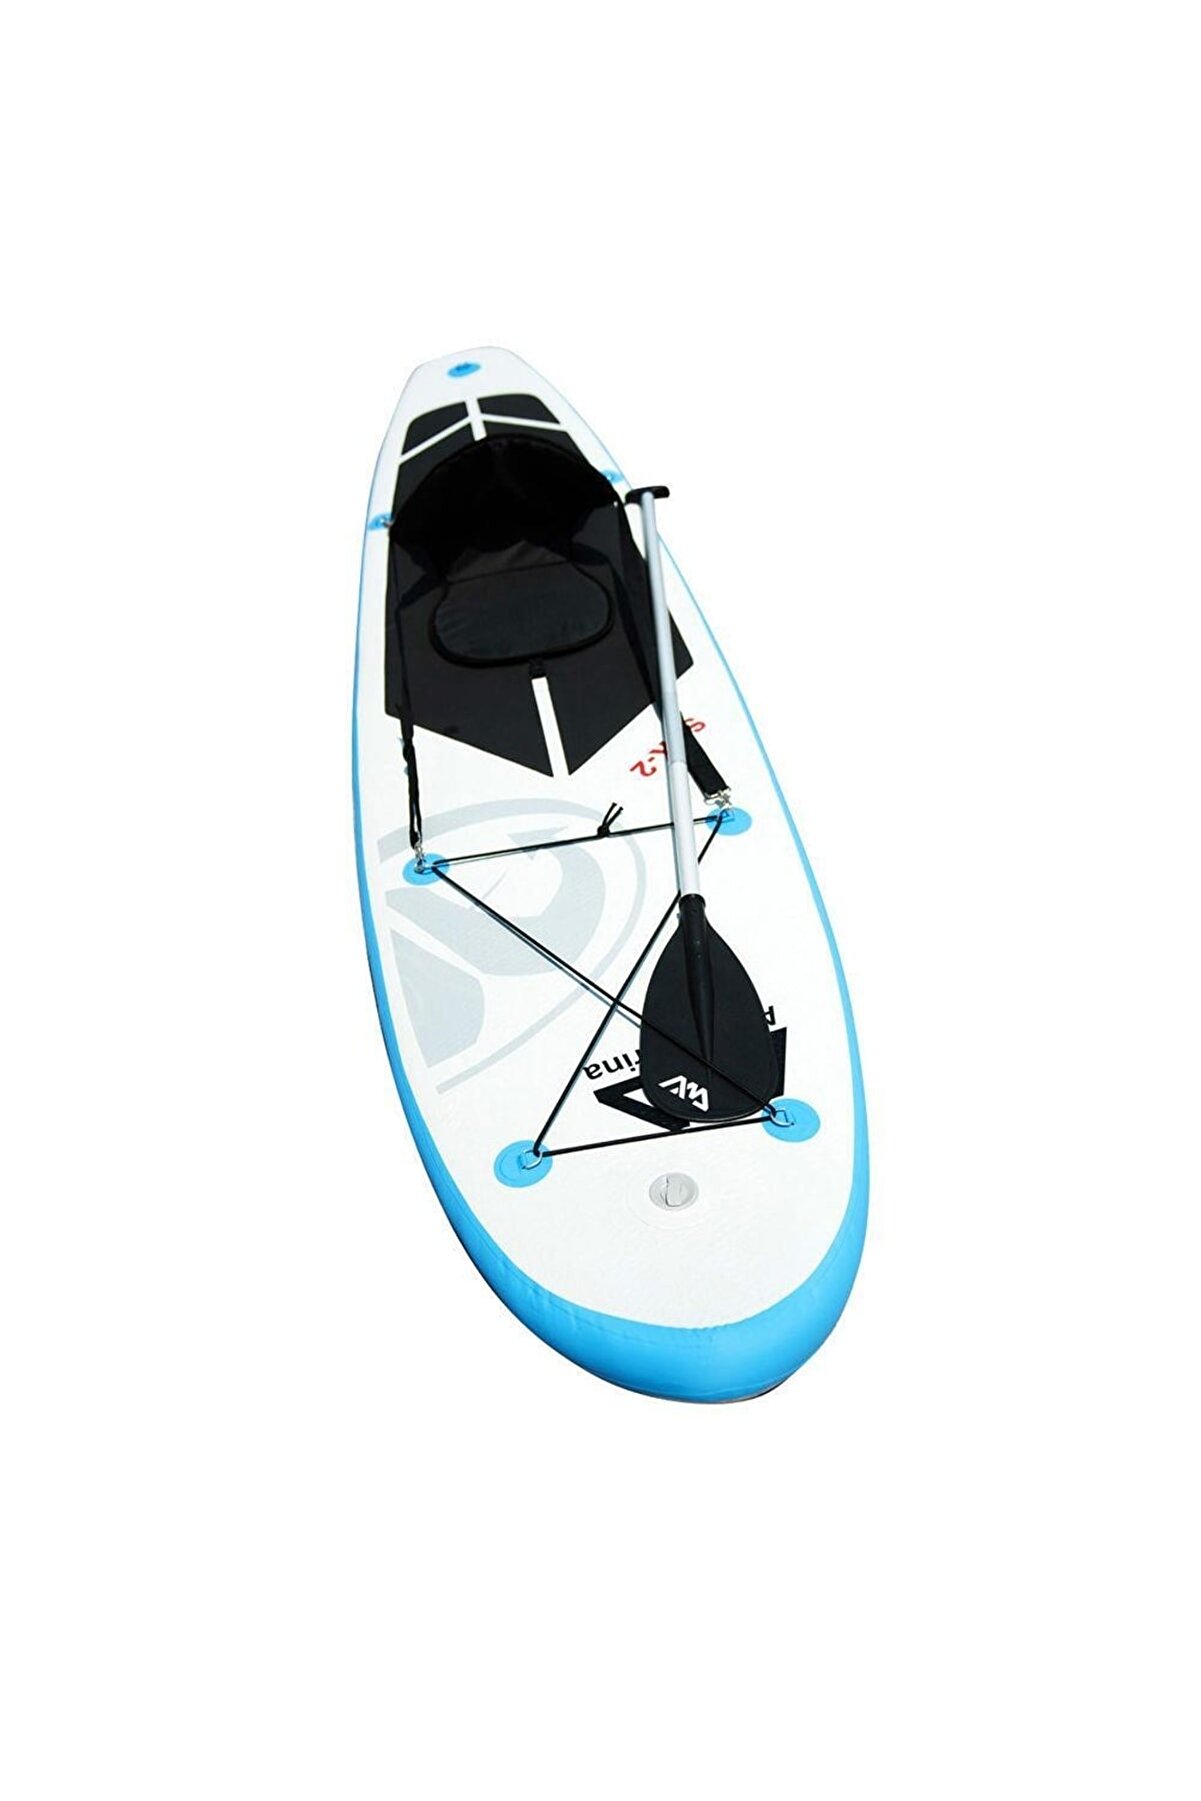 aquamarina Aqua Marina Spk-2 Stand-up Paddle Board 3.3m